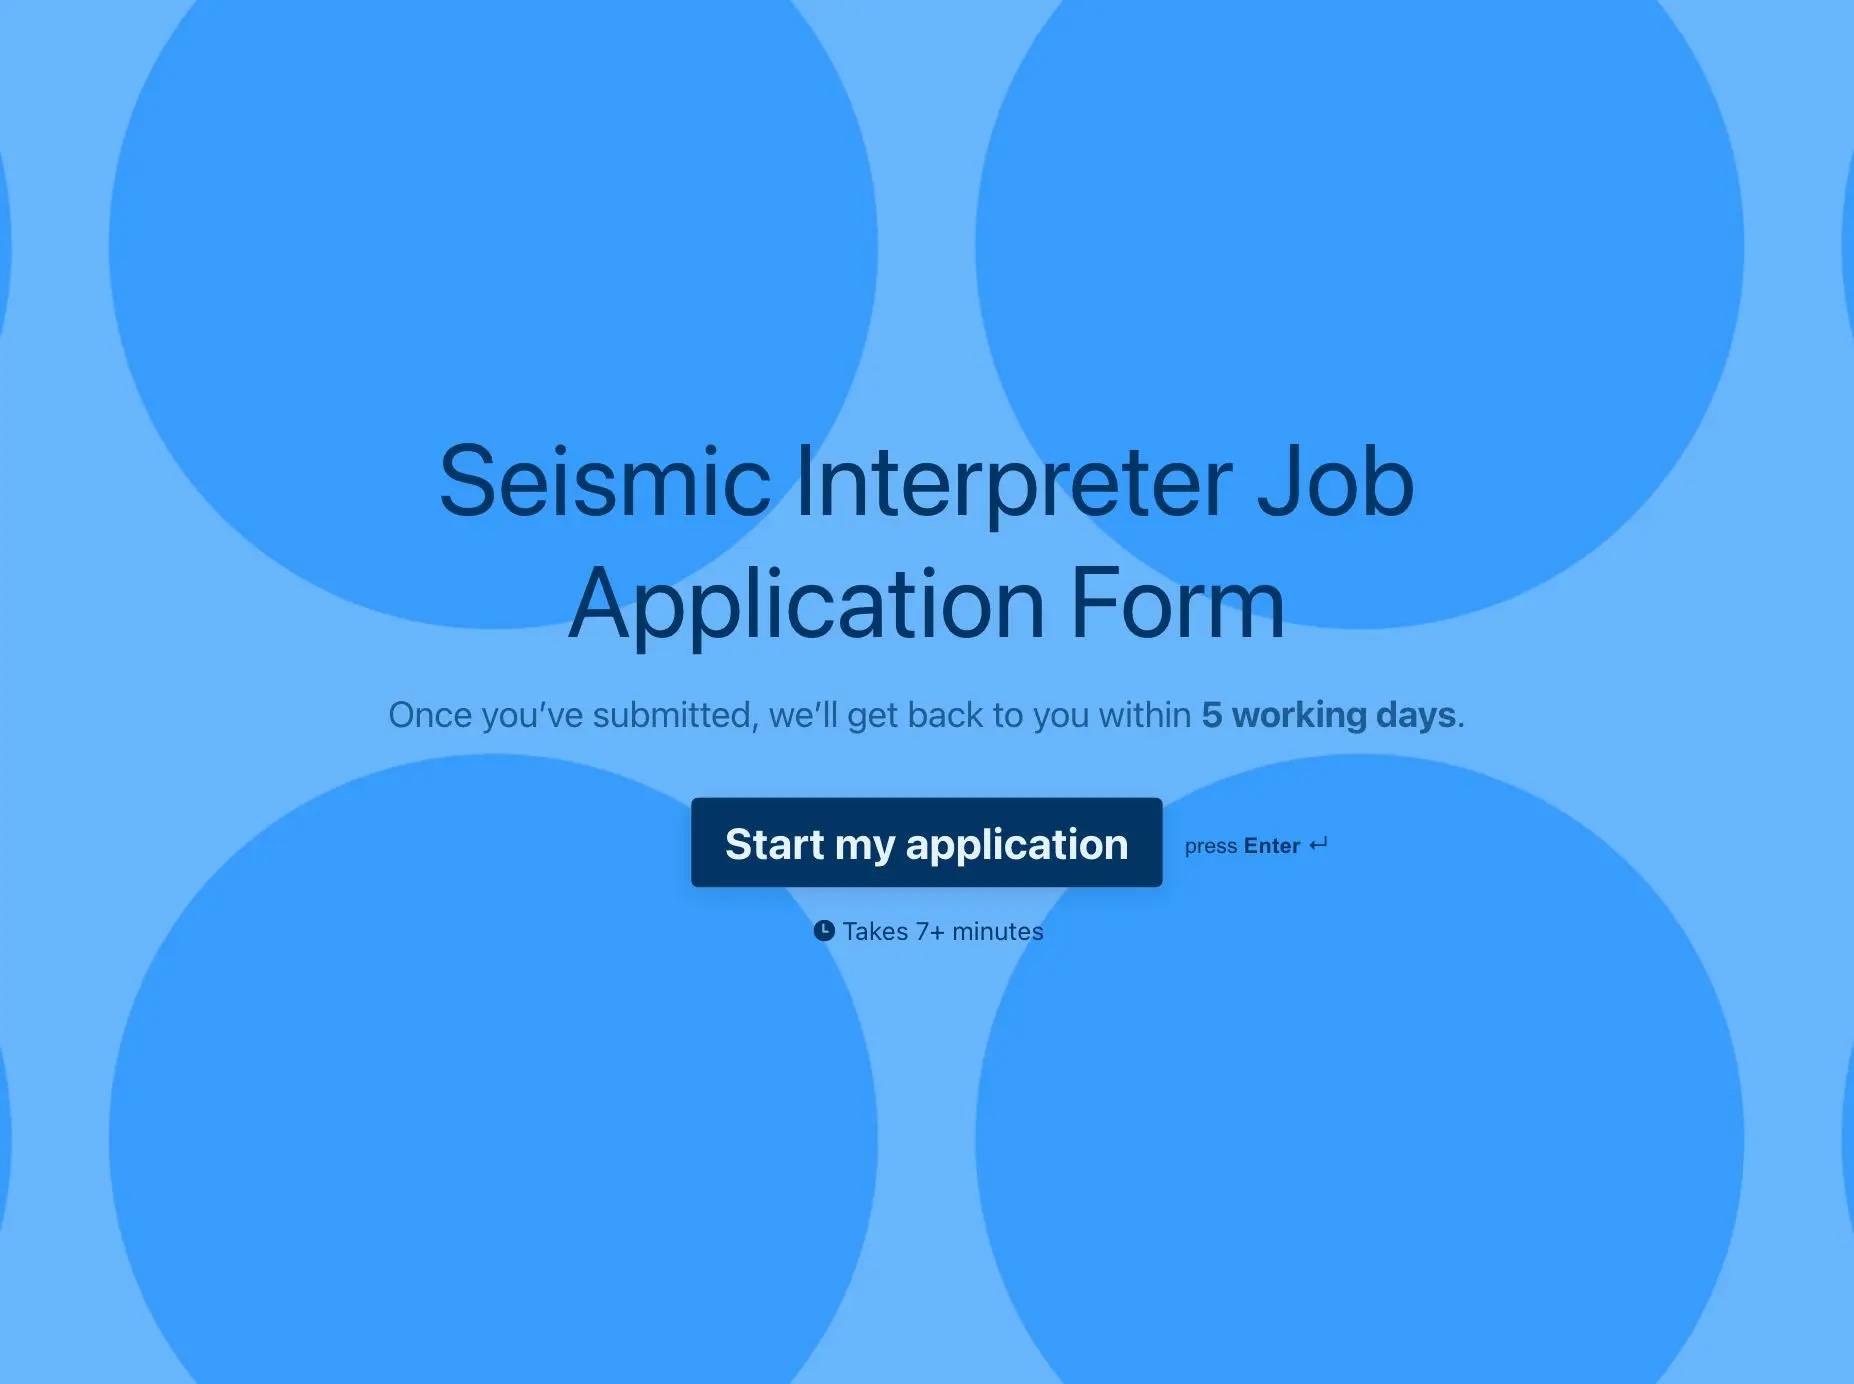 Seismic Interpreter Job Application Form Template Hero